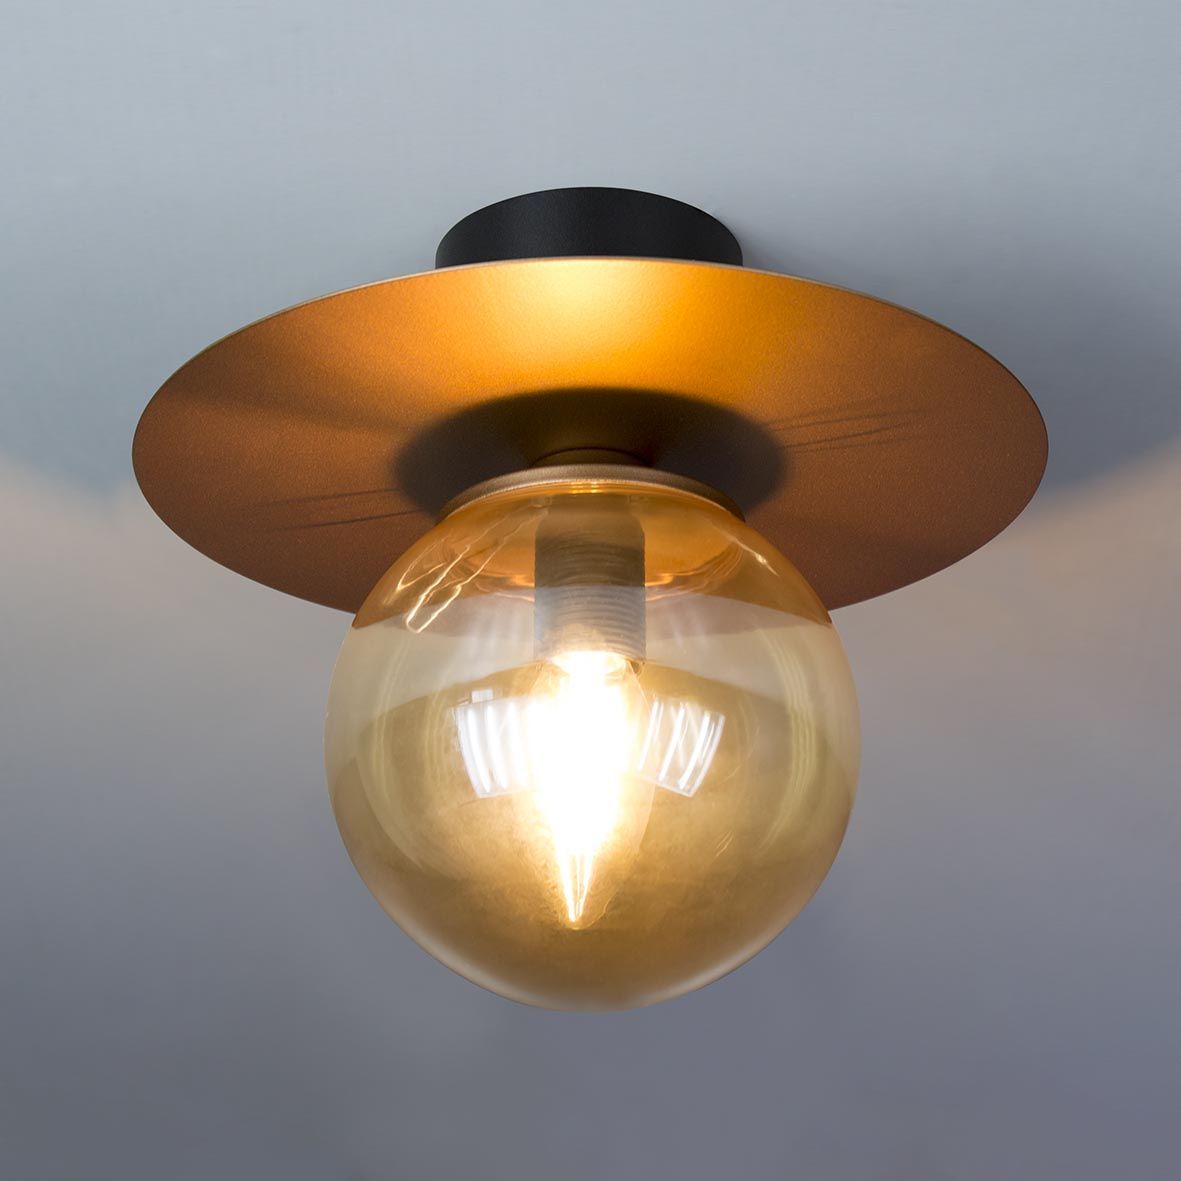 Ceiling lamp Quest Imperium Light 341119.49.23 copper / brown